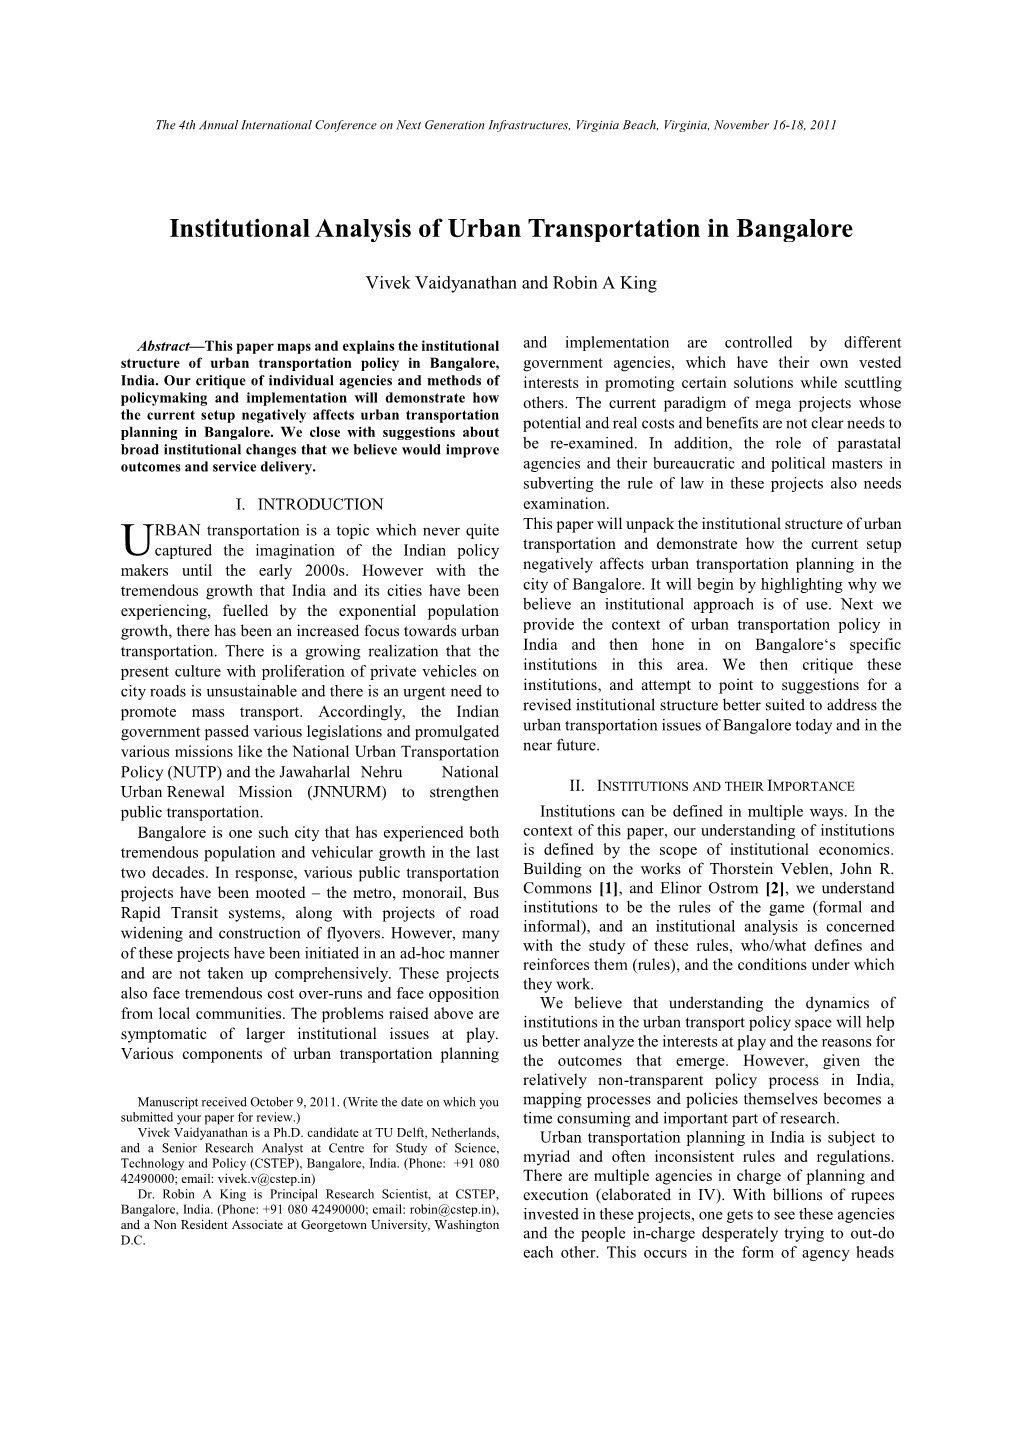 Institutional Analysis of Urban Transportation in Bangalore